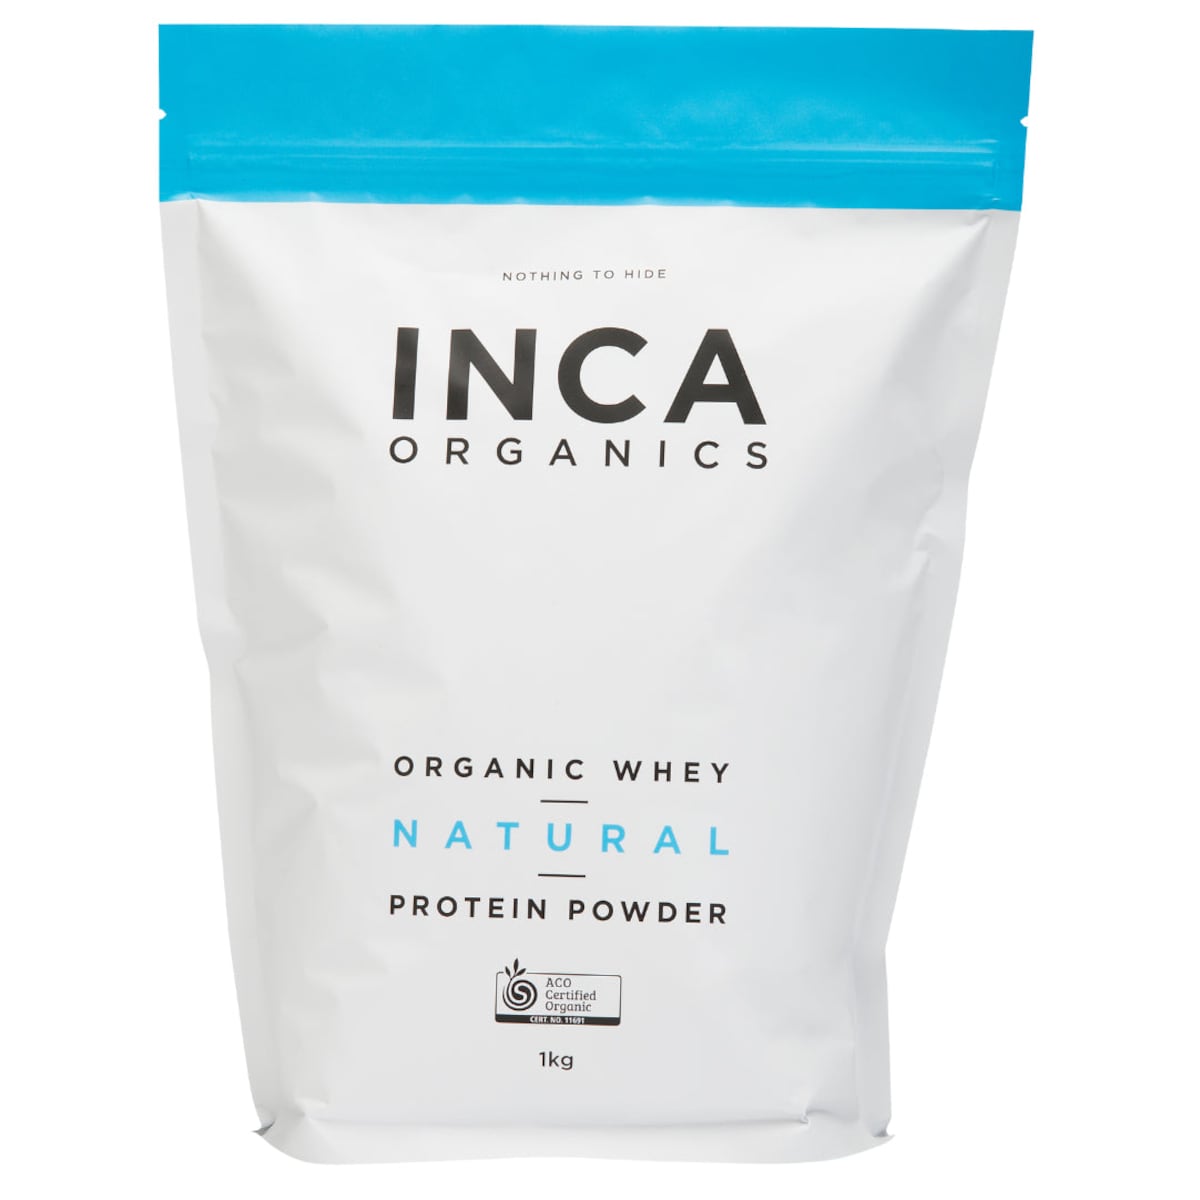 Inca Organics Organic Whey Protein Powder Natural 1kg Australia